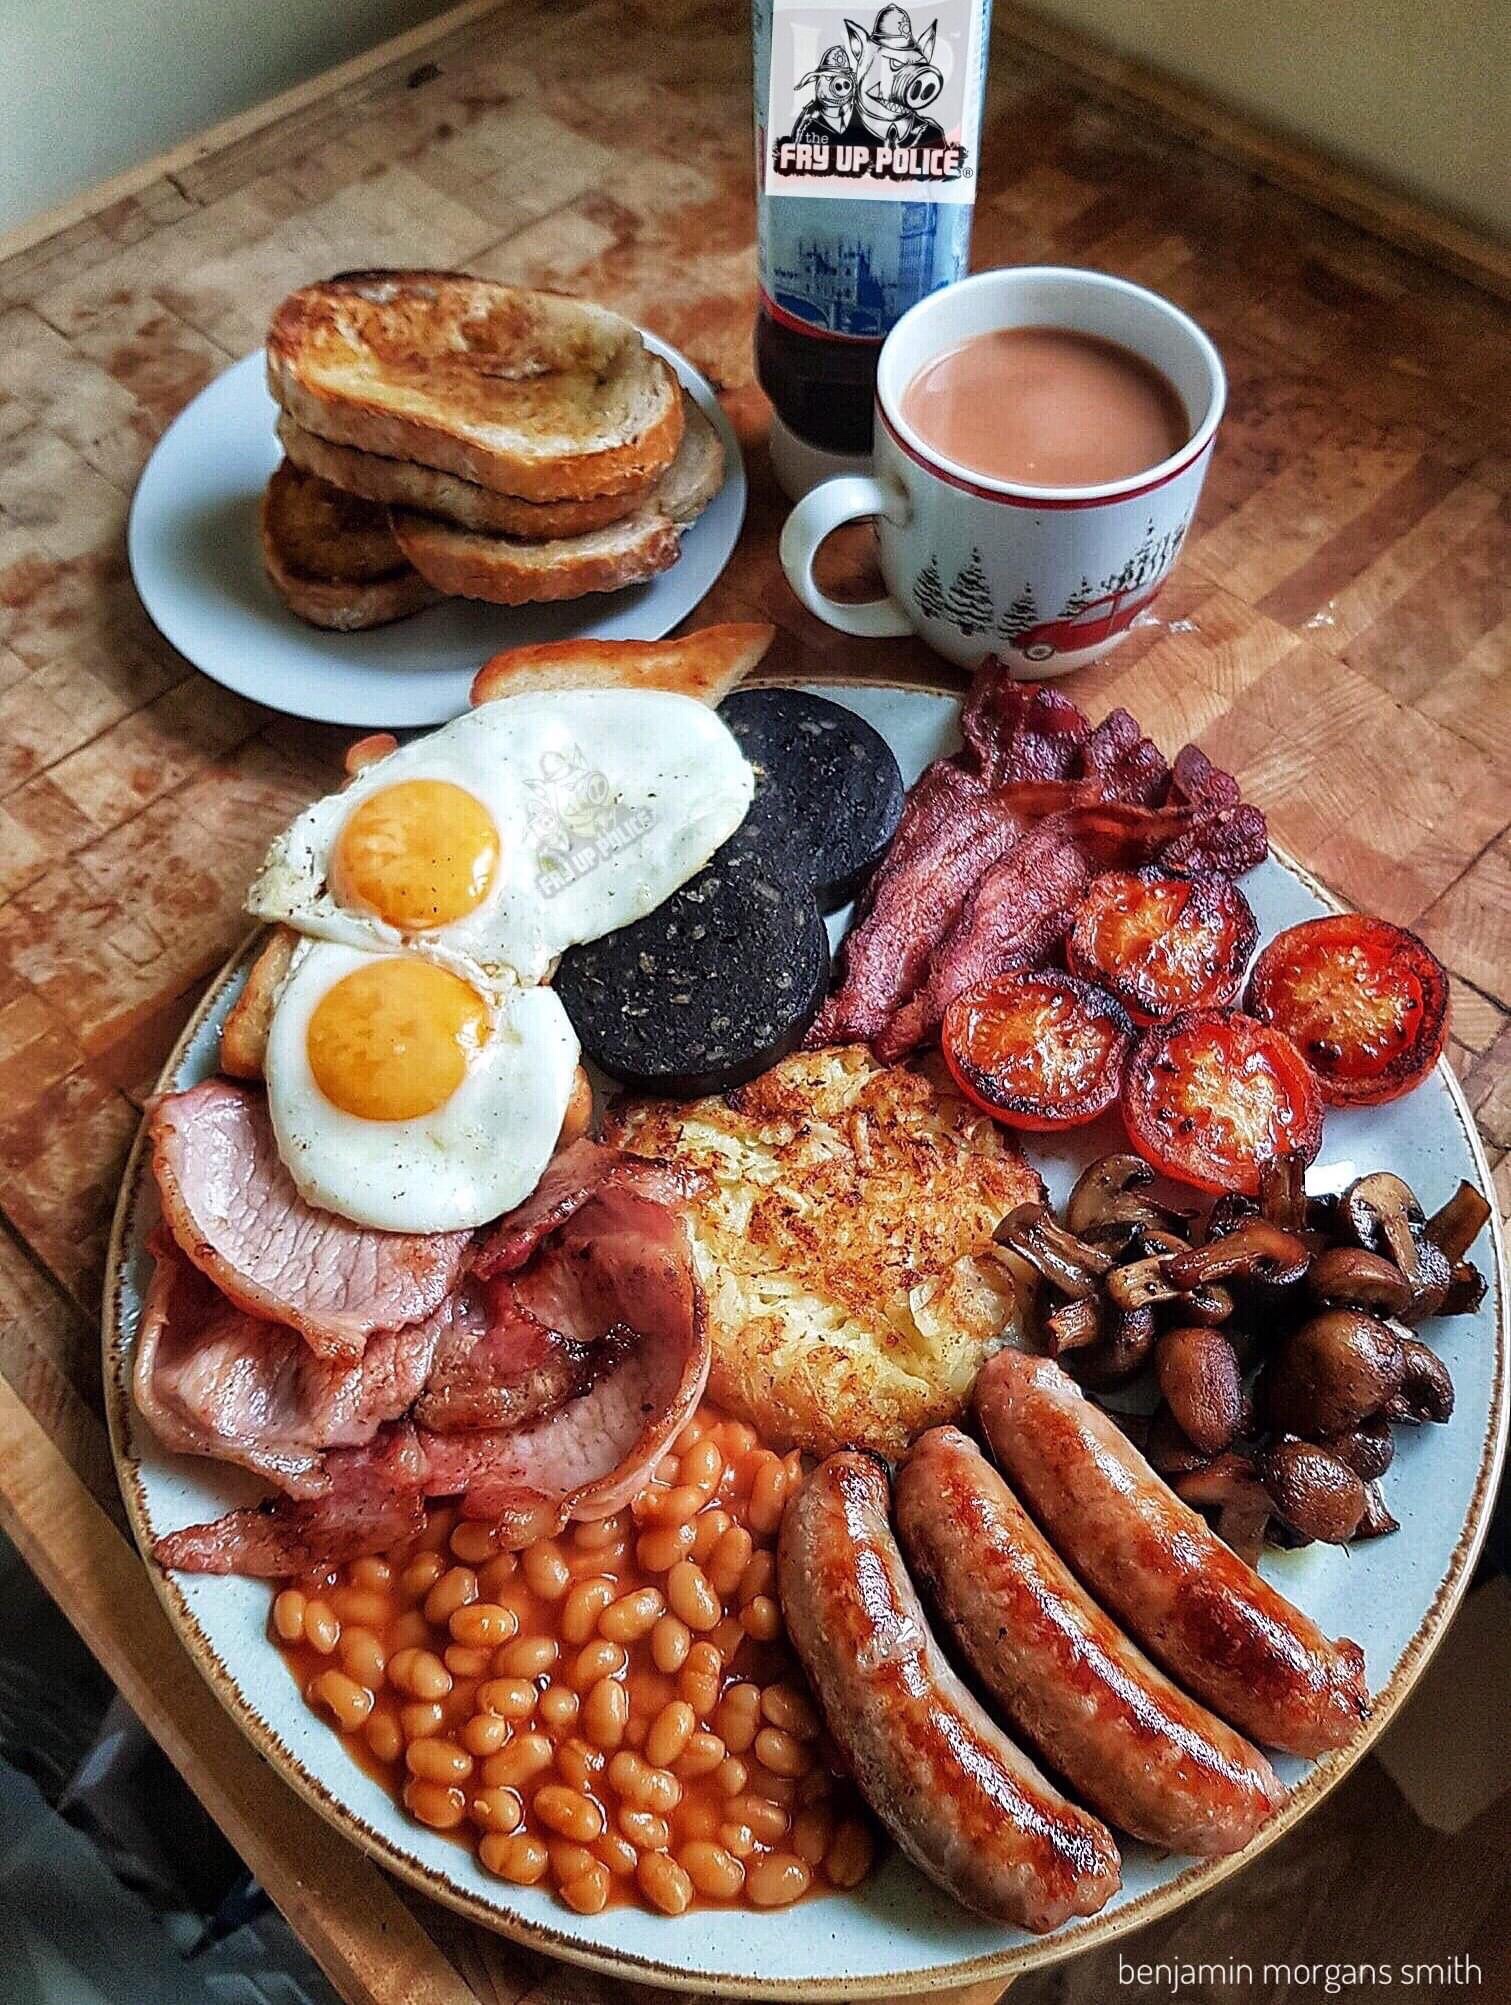 full english breakfast - Fry Up Police benjamin morgans smith